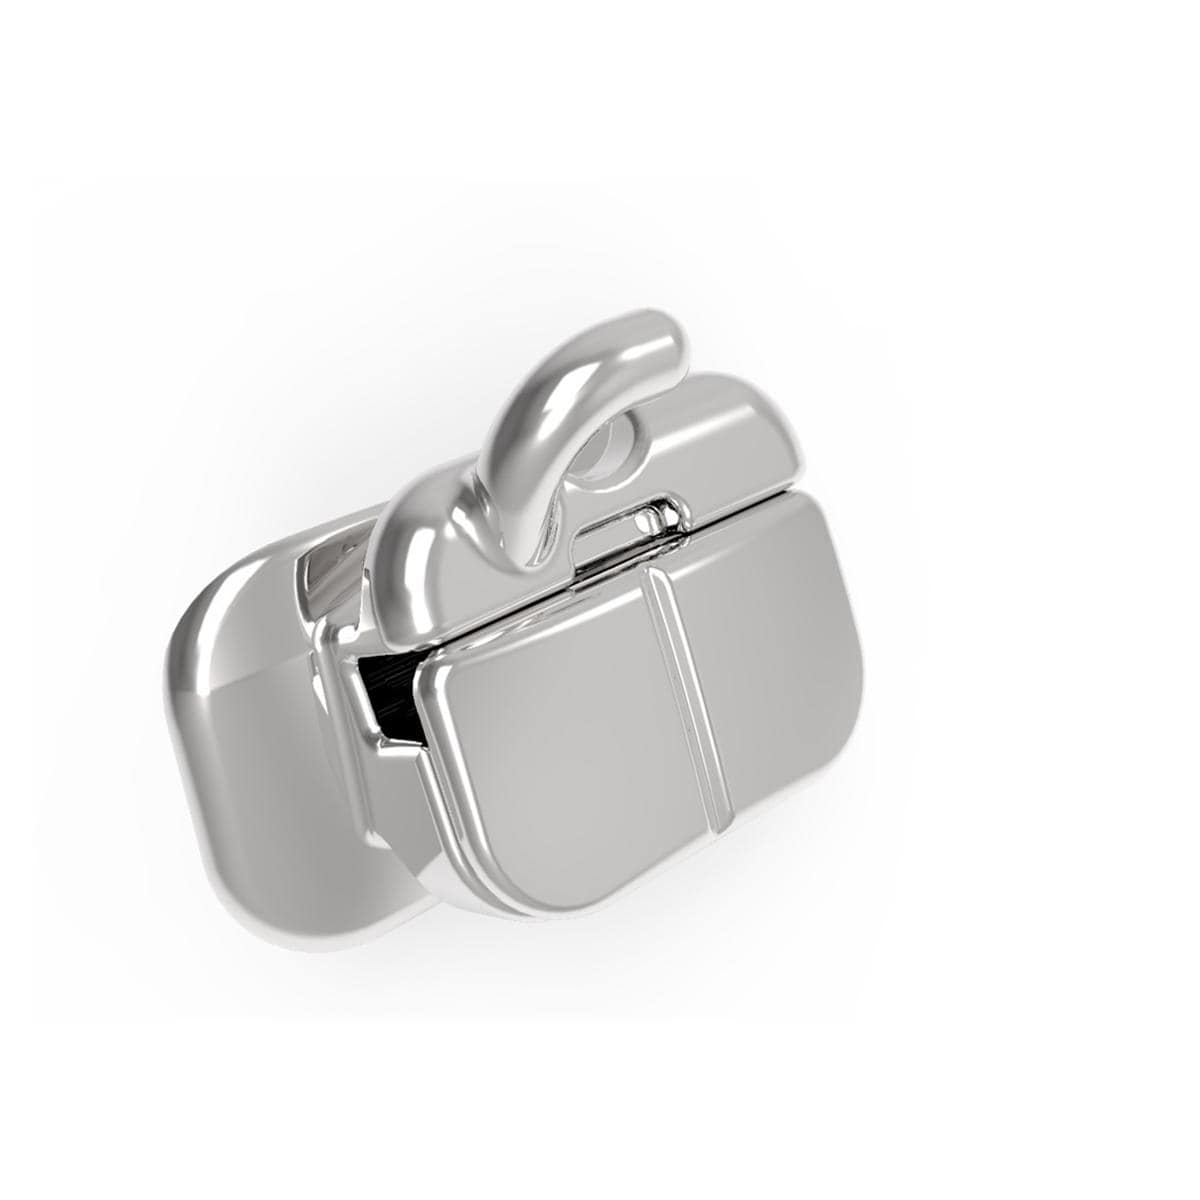 CARRIERE SLX 3D Metal Self Ligating Bracket .022 - UR7 HK (977-UR7-HK-10), 10 stuks